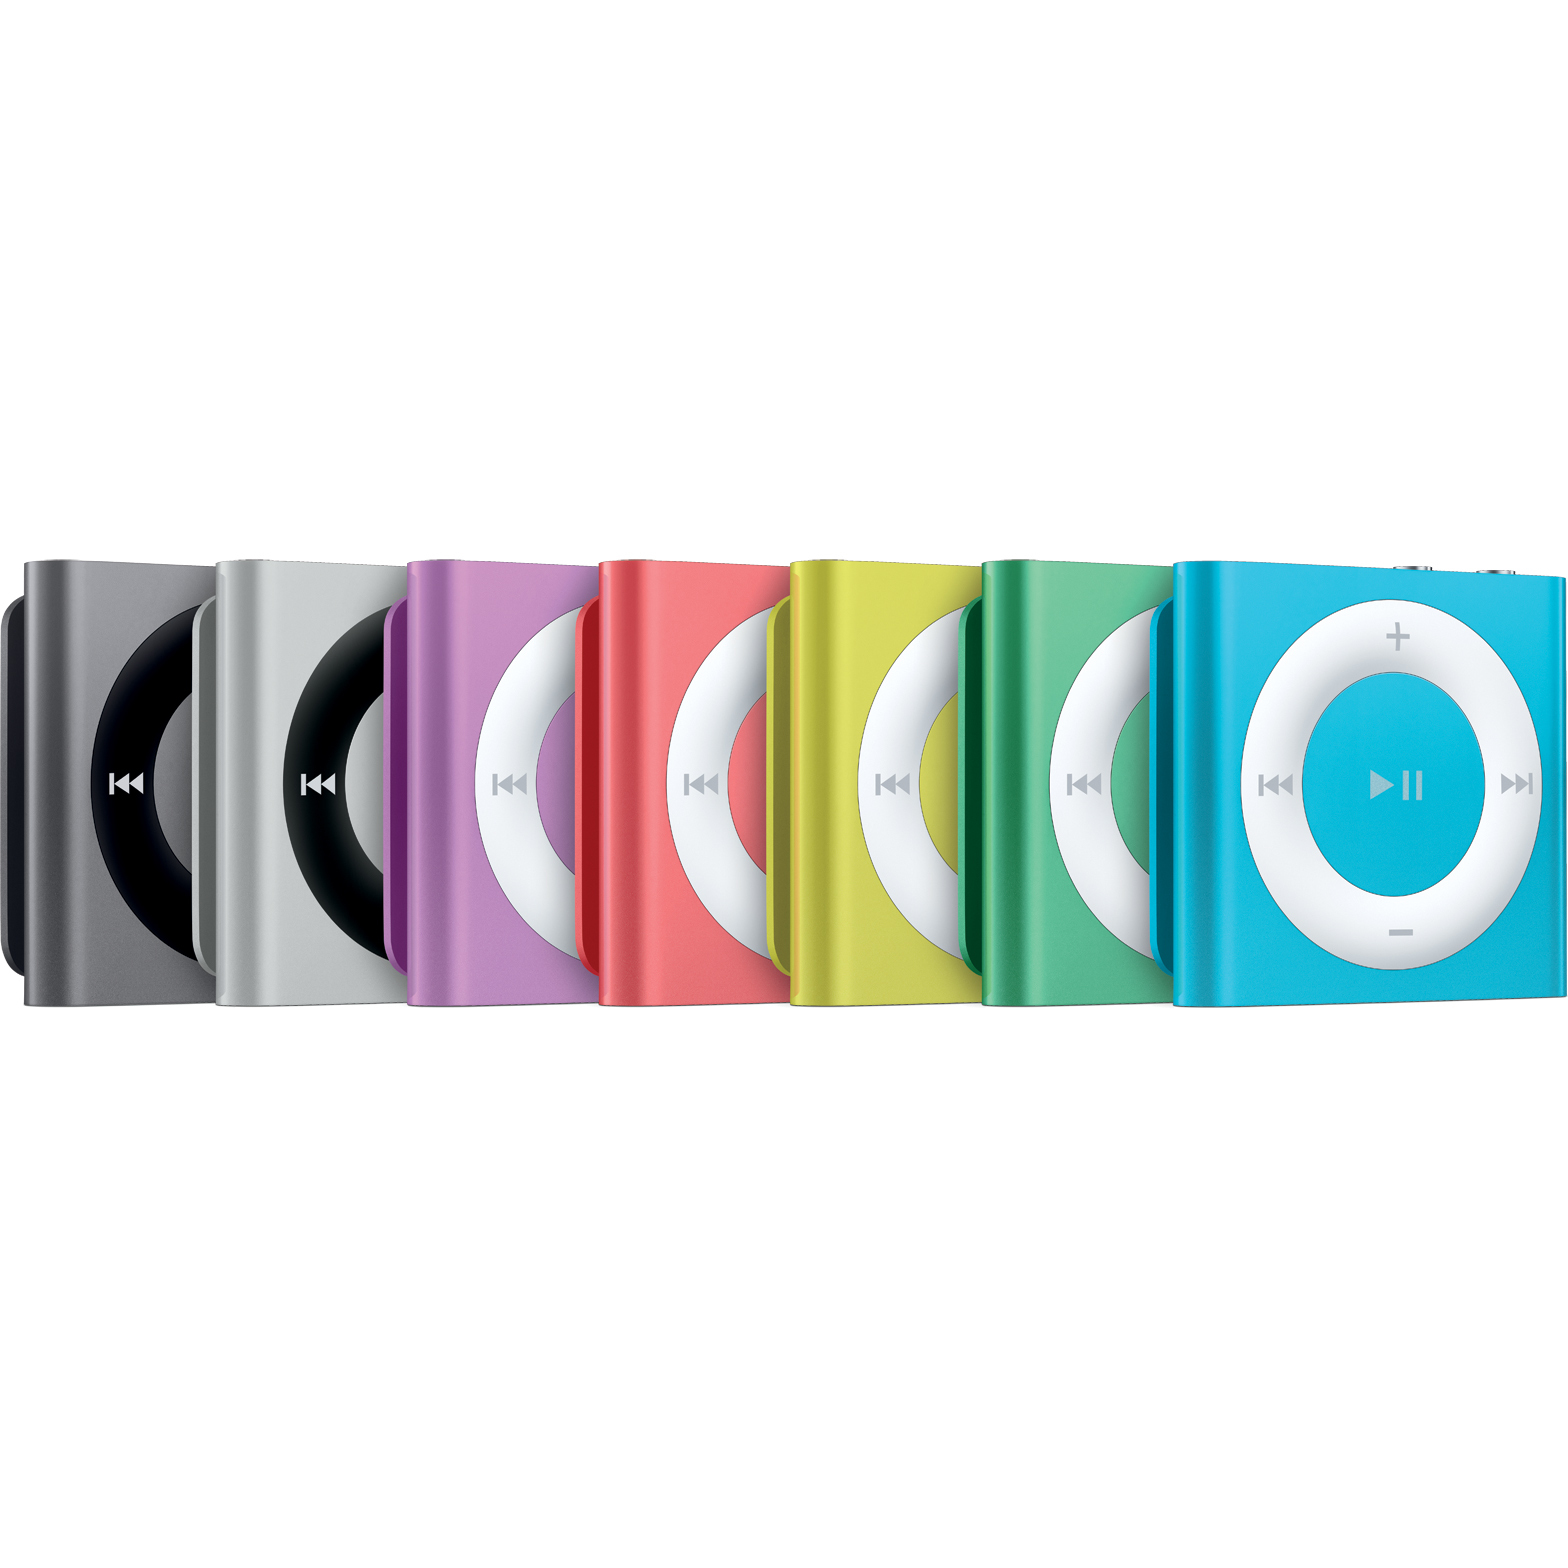 iPod shuffle 4G 2GB Flash MP3 Player - image 1 of 3